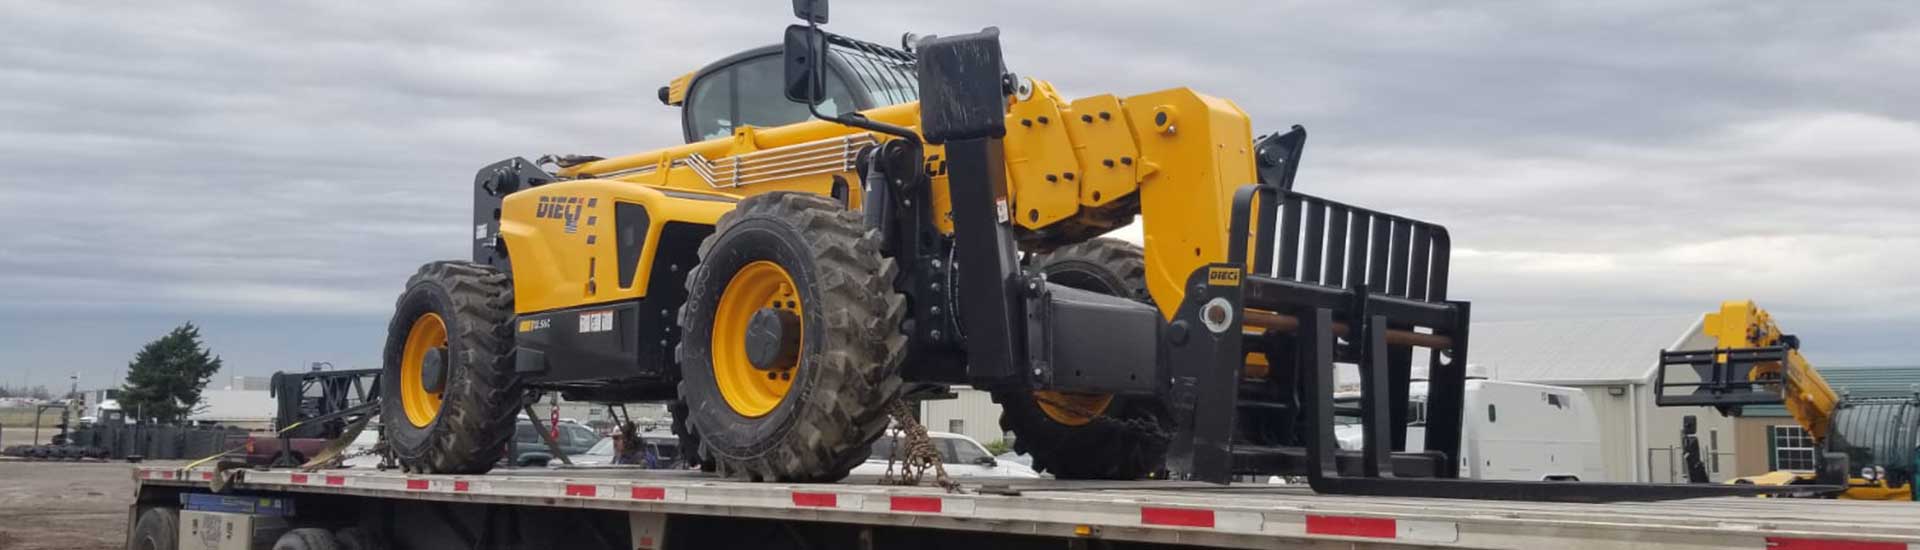 V Bar Equipment Company Texas Forklift Rental And Repair